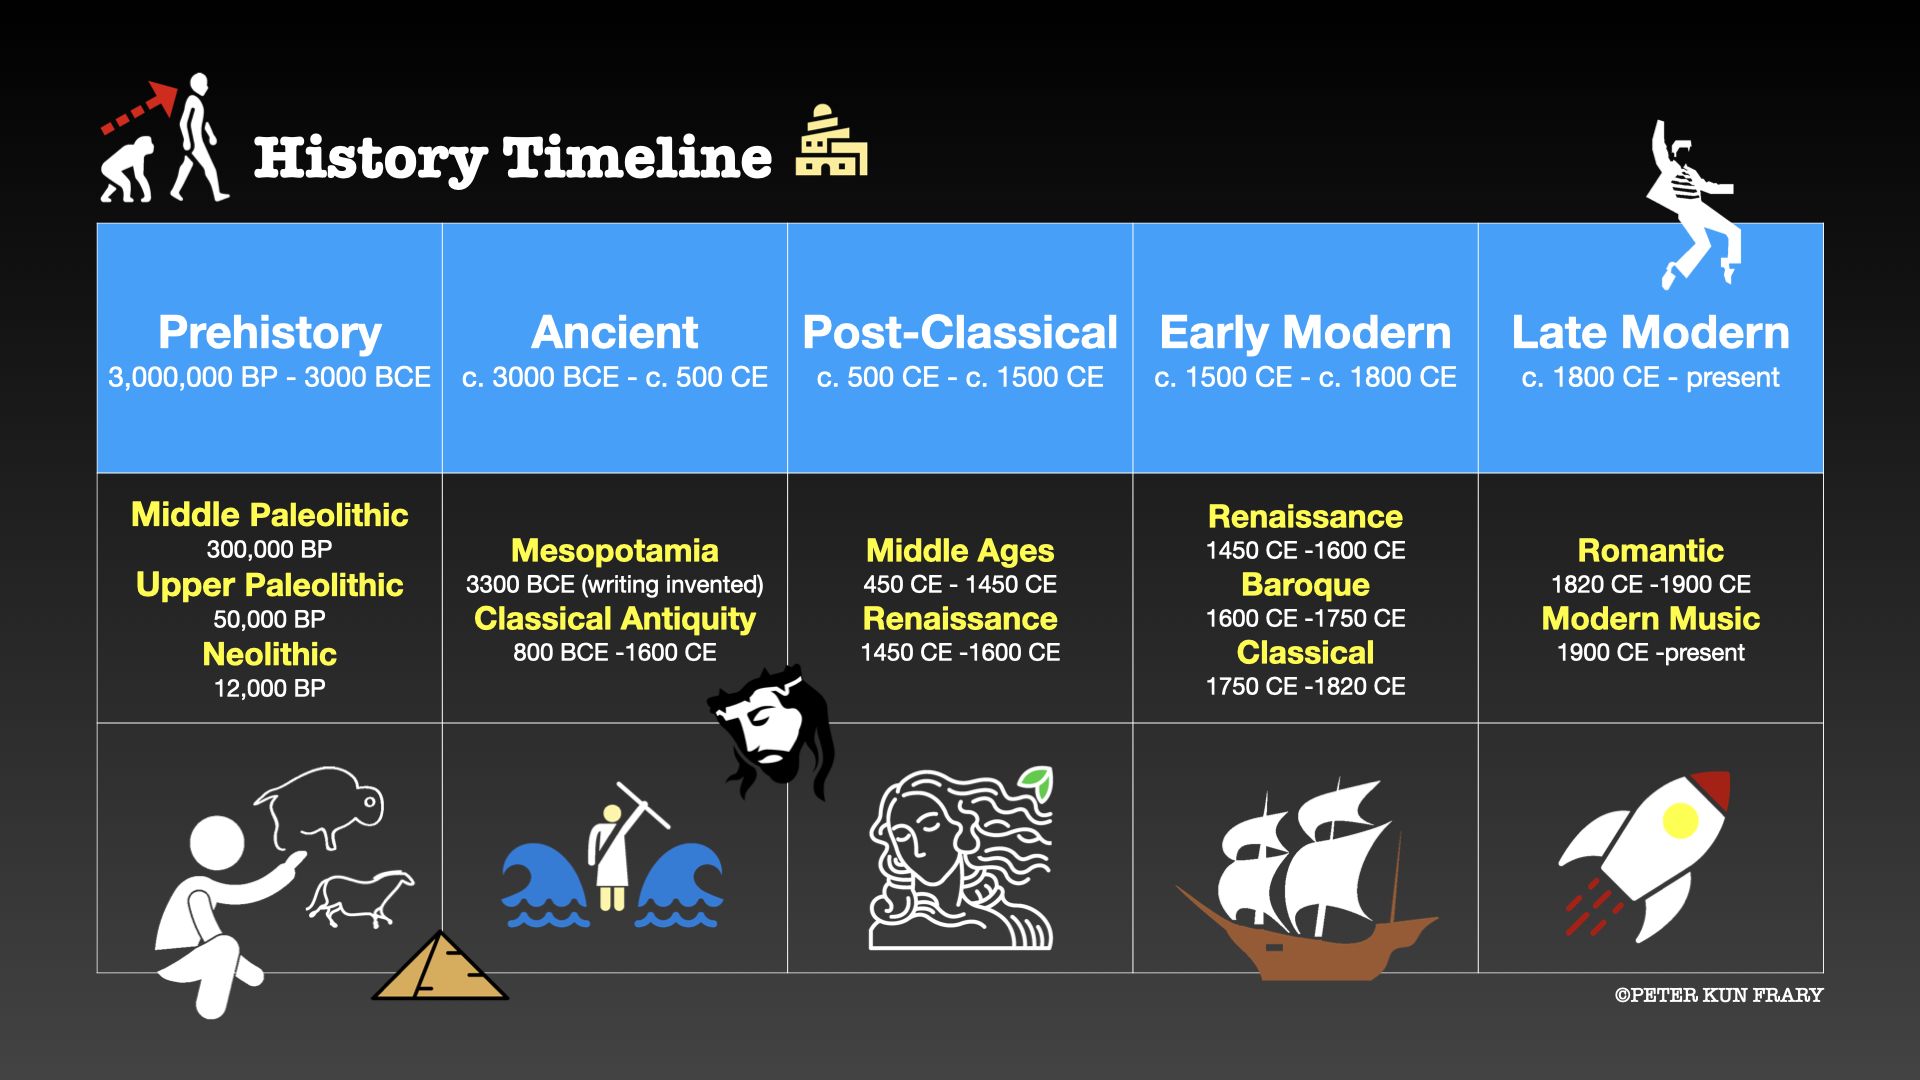 Human History Timeline